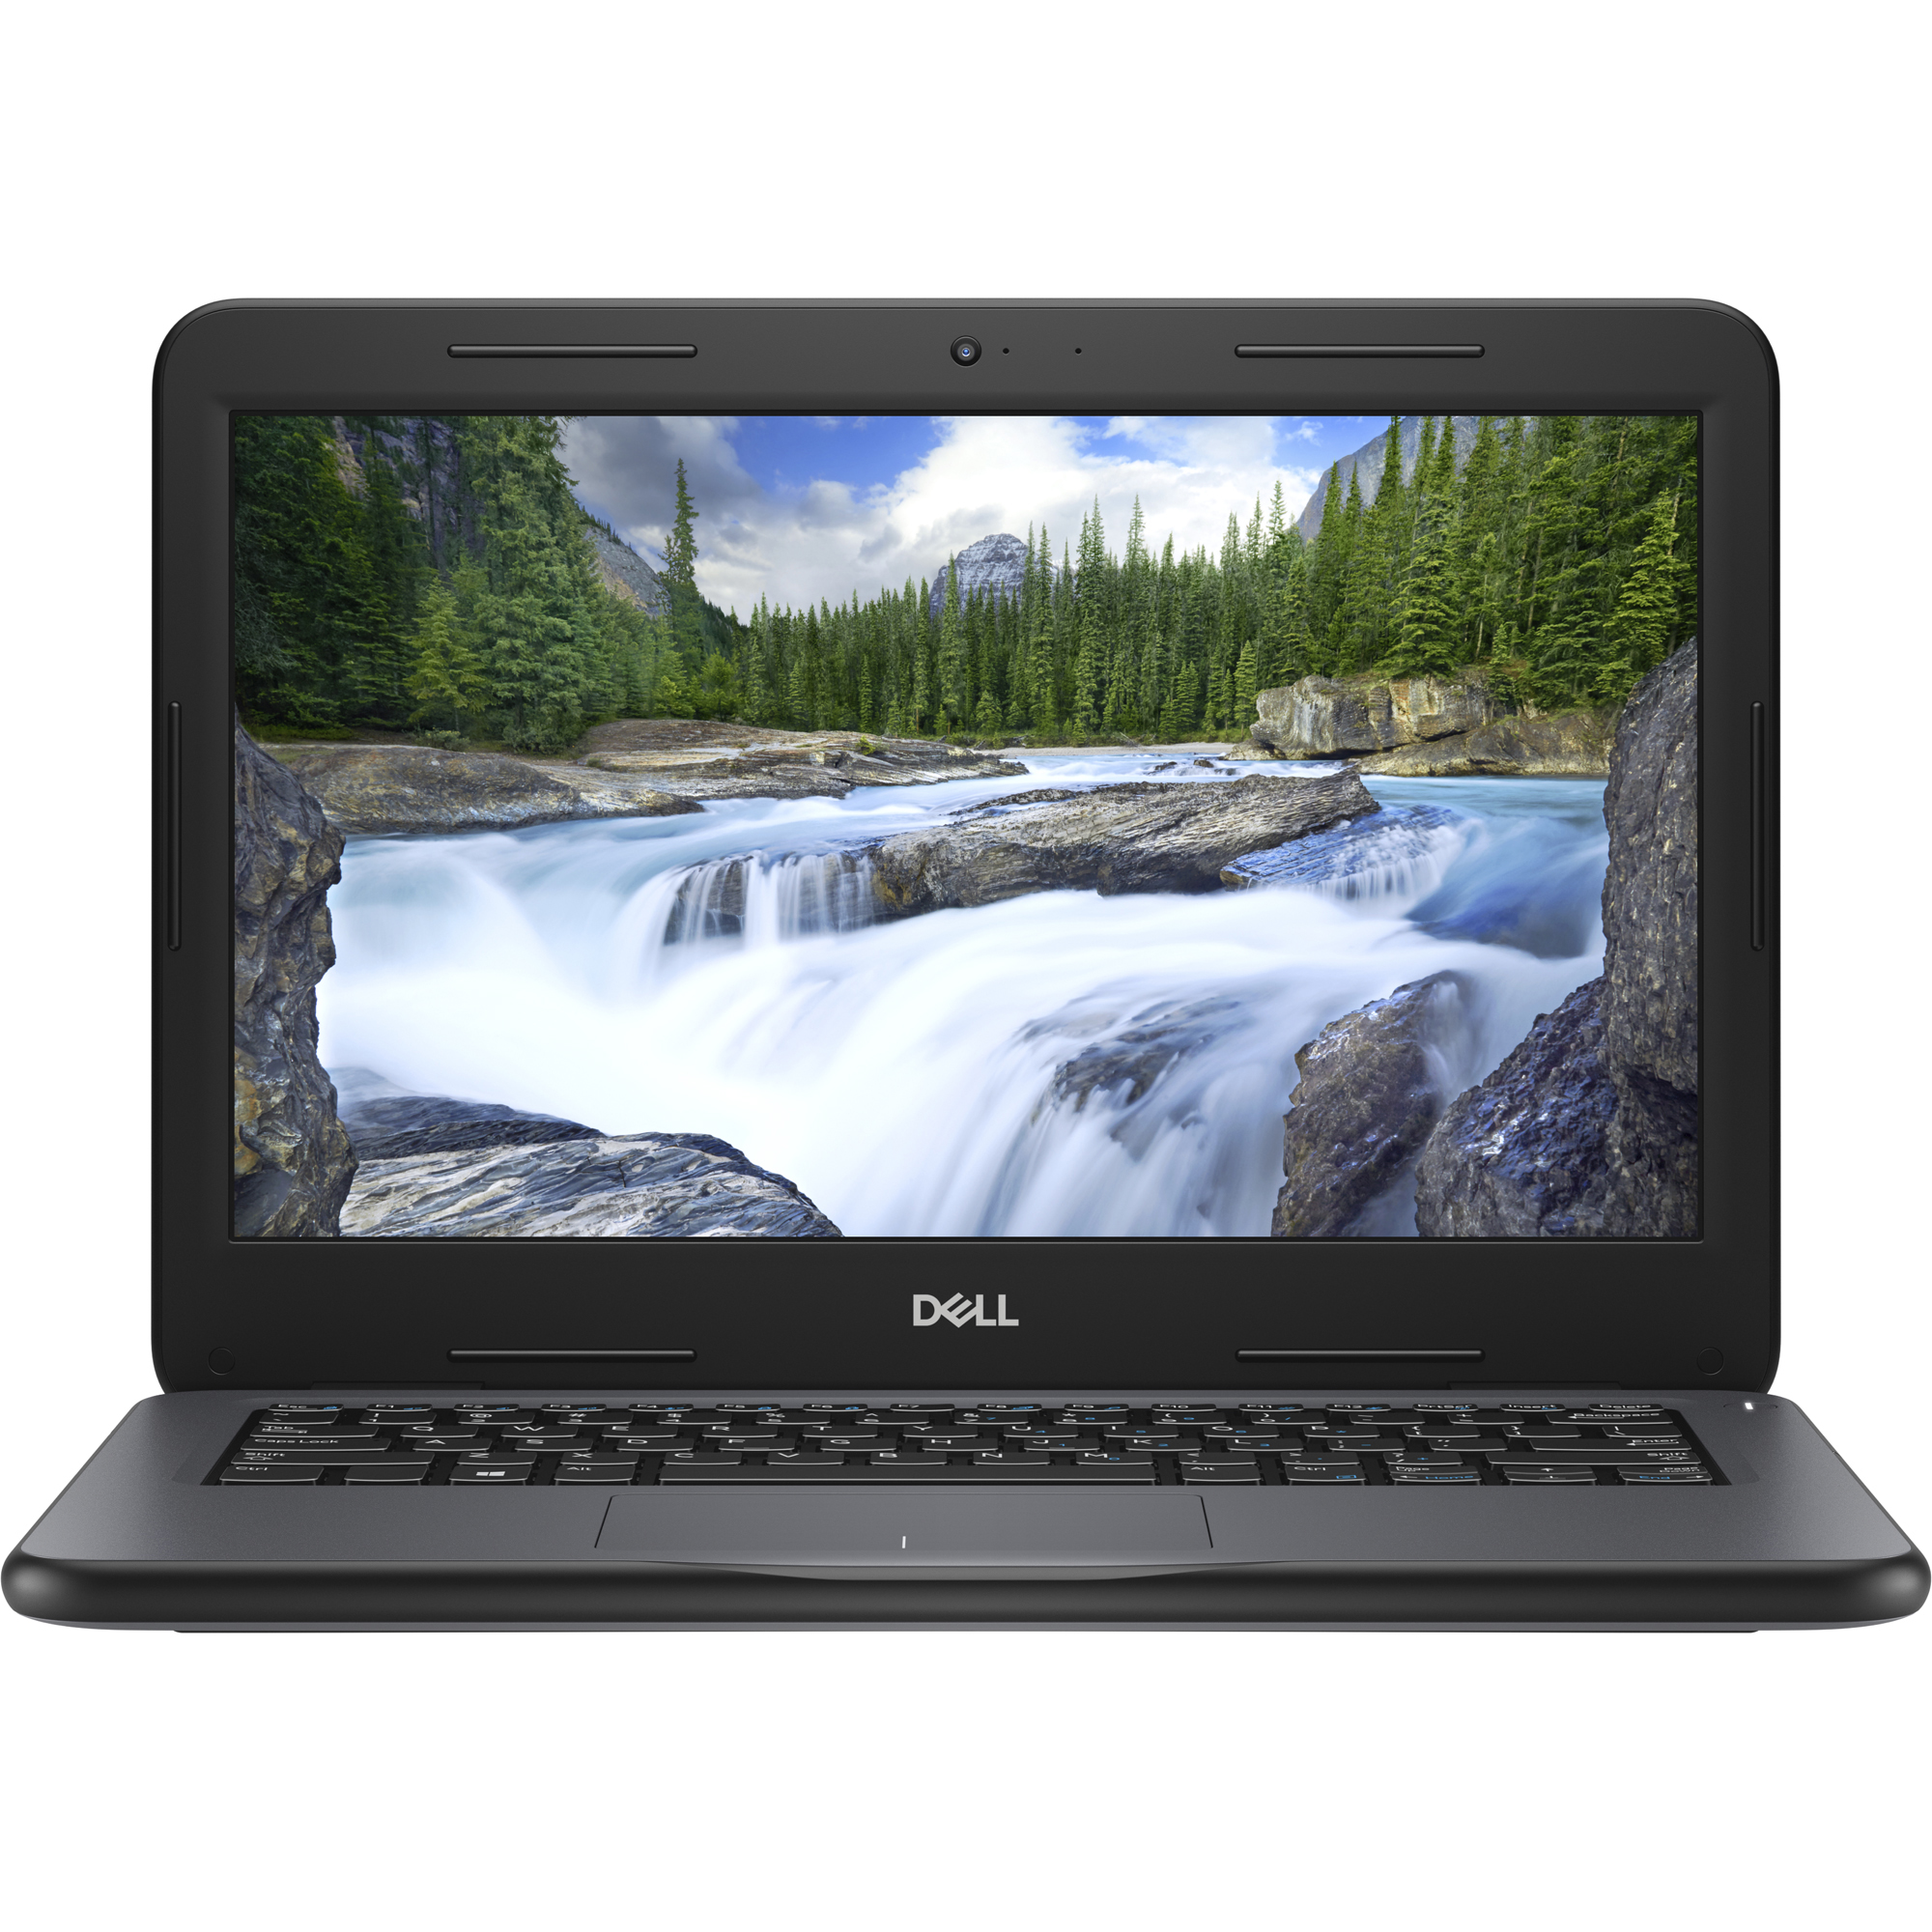 Dell Chromebook 11 3000 3100 11.6" 2 in 1 Chromebook - Intel Celeron N4020 - 4GB RAM - 32GB Flash Memory - 1366 x 768 - Intel HD Graphics - Chrome OS - Convertible - Black - image 1 of 5